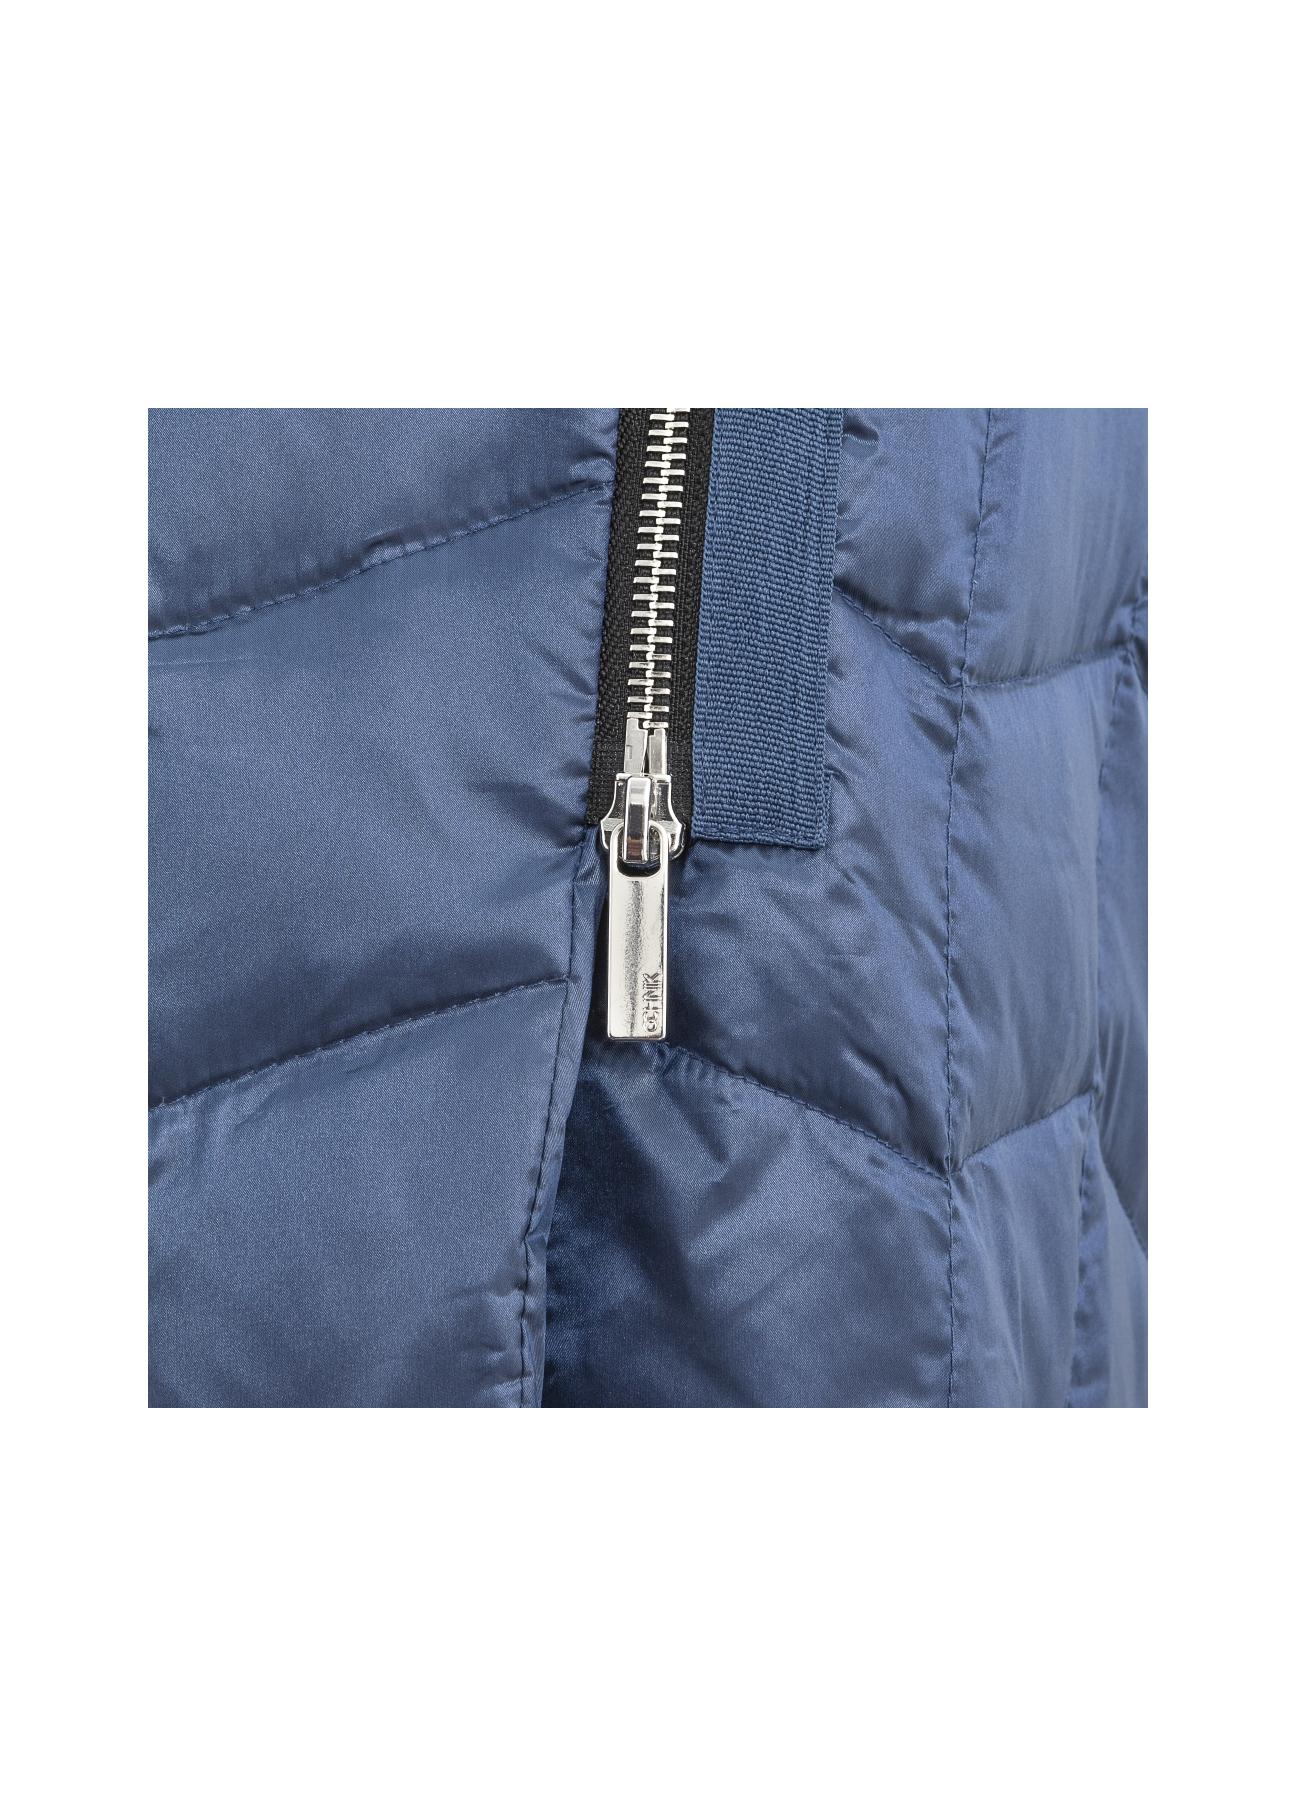 Niebieska kurtka puchowa damska KURDT-0097-61(Z18)